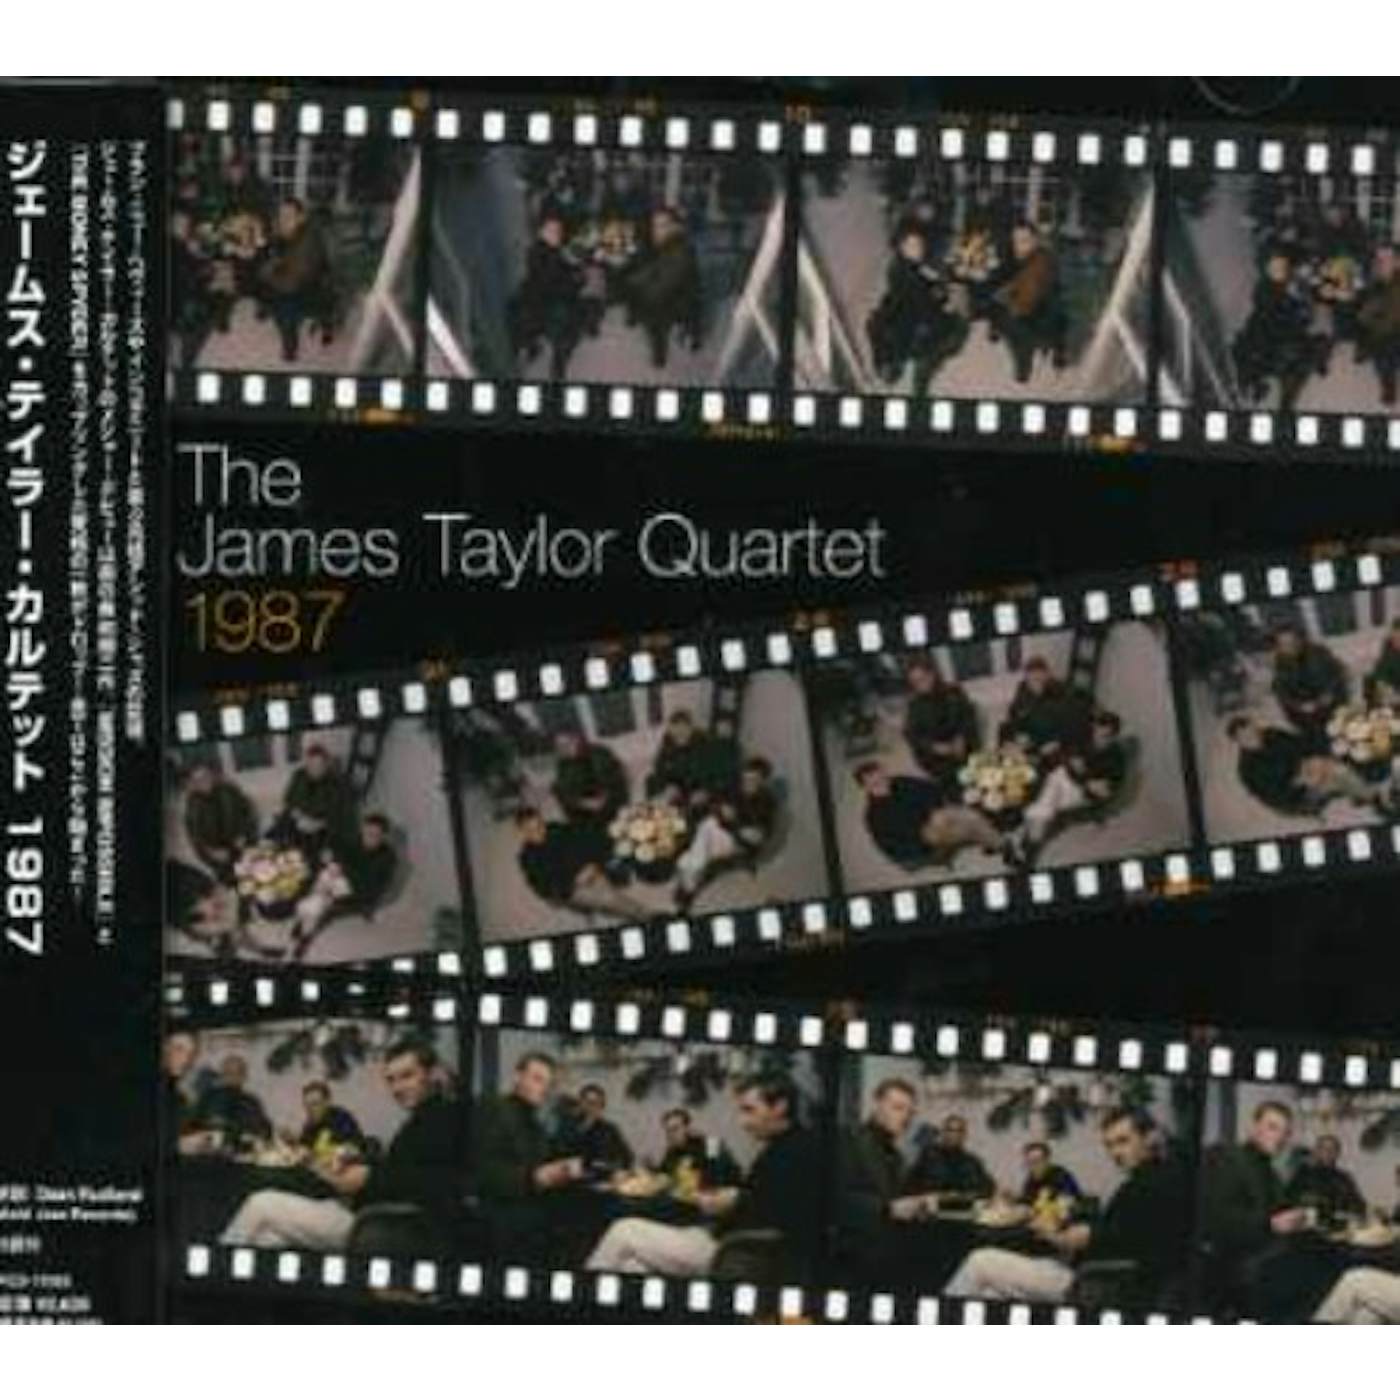 James Taylor Quartet 1987 CD